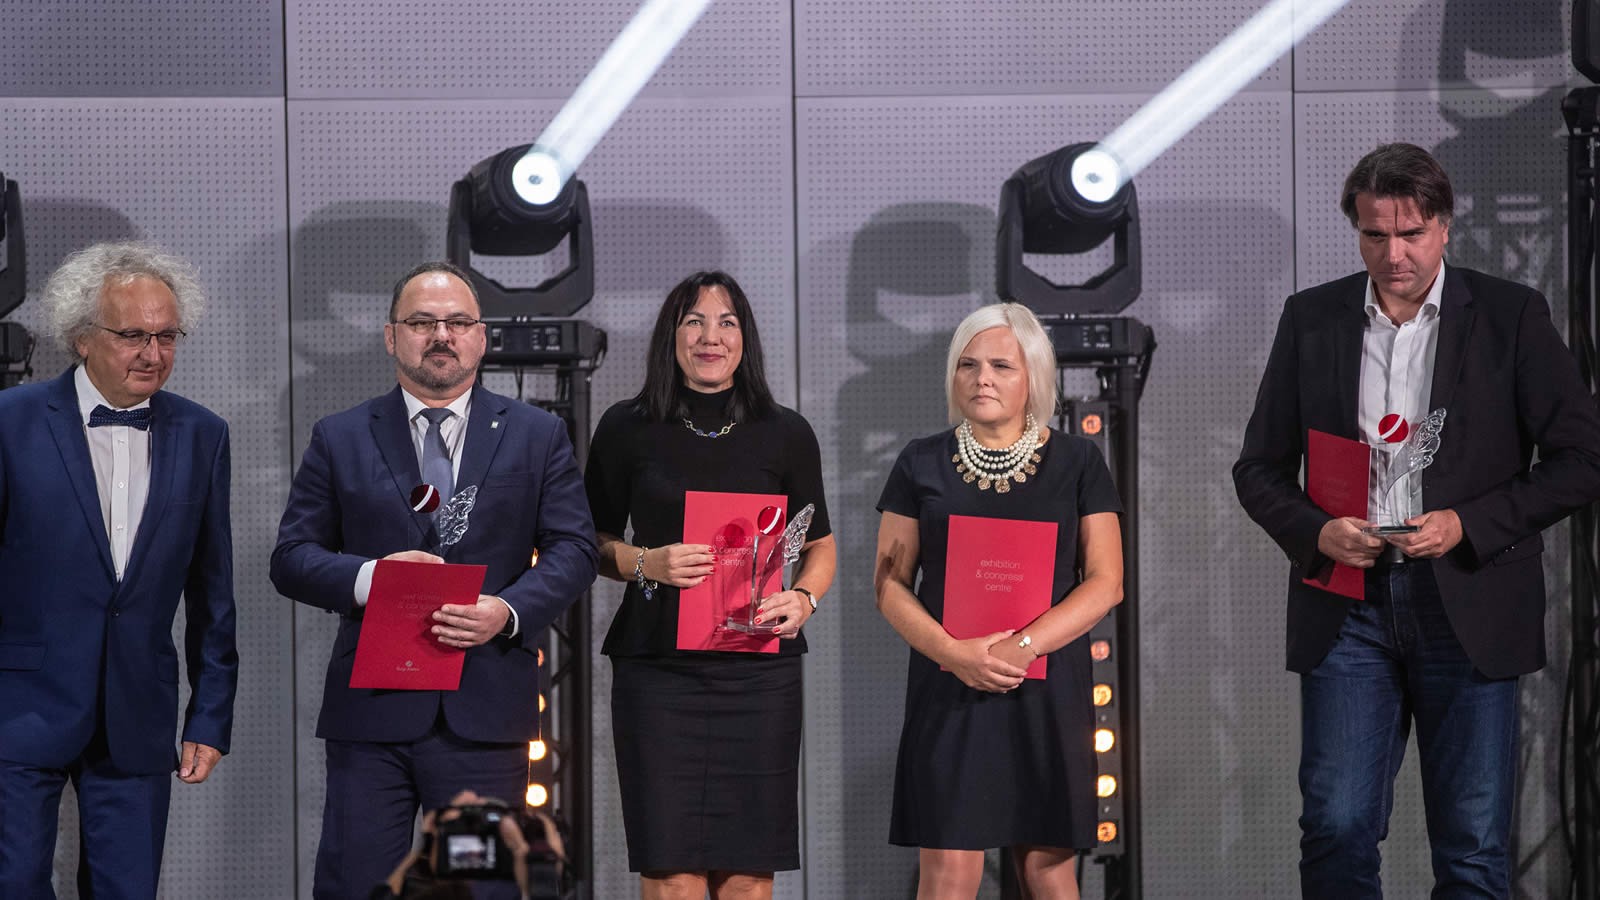 Awards of the President of Kielce Trade Fairs